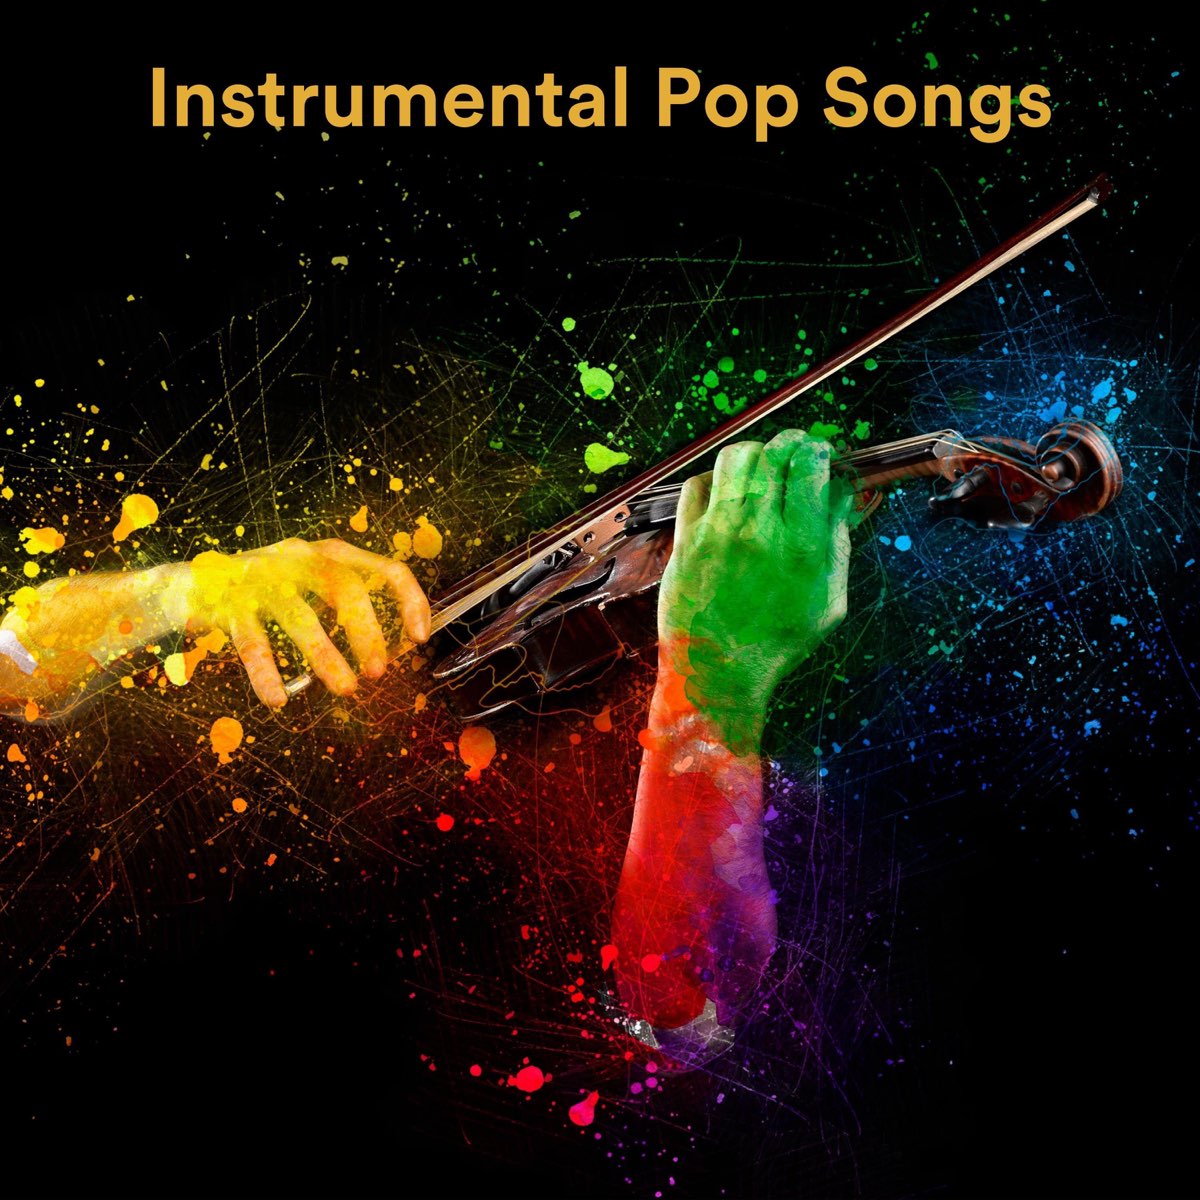 Instrumental Pop Songs - Album by Various Artists - Apple Music